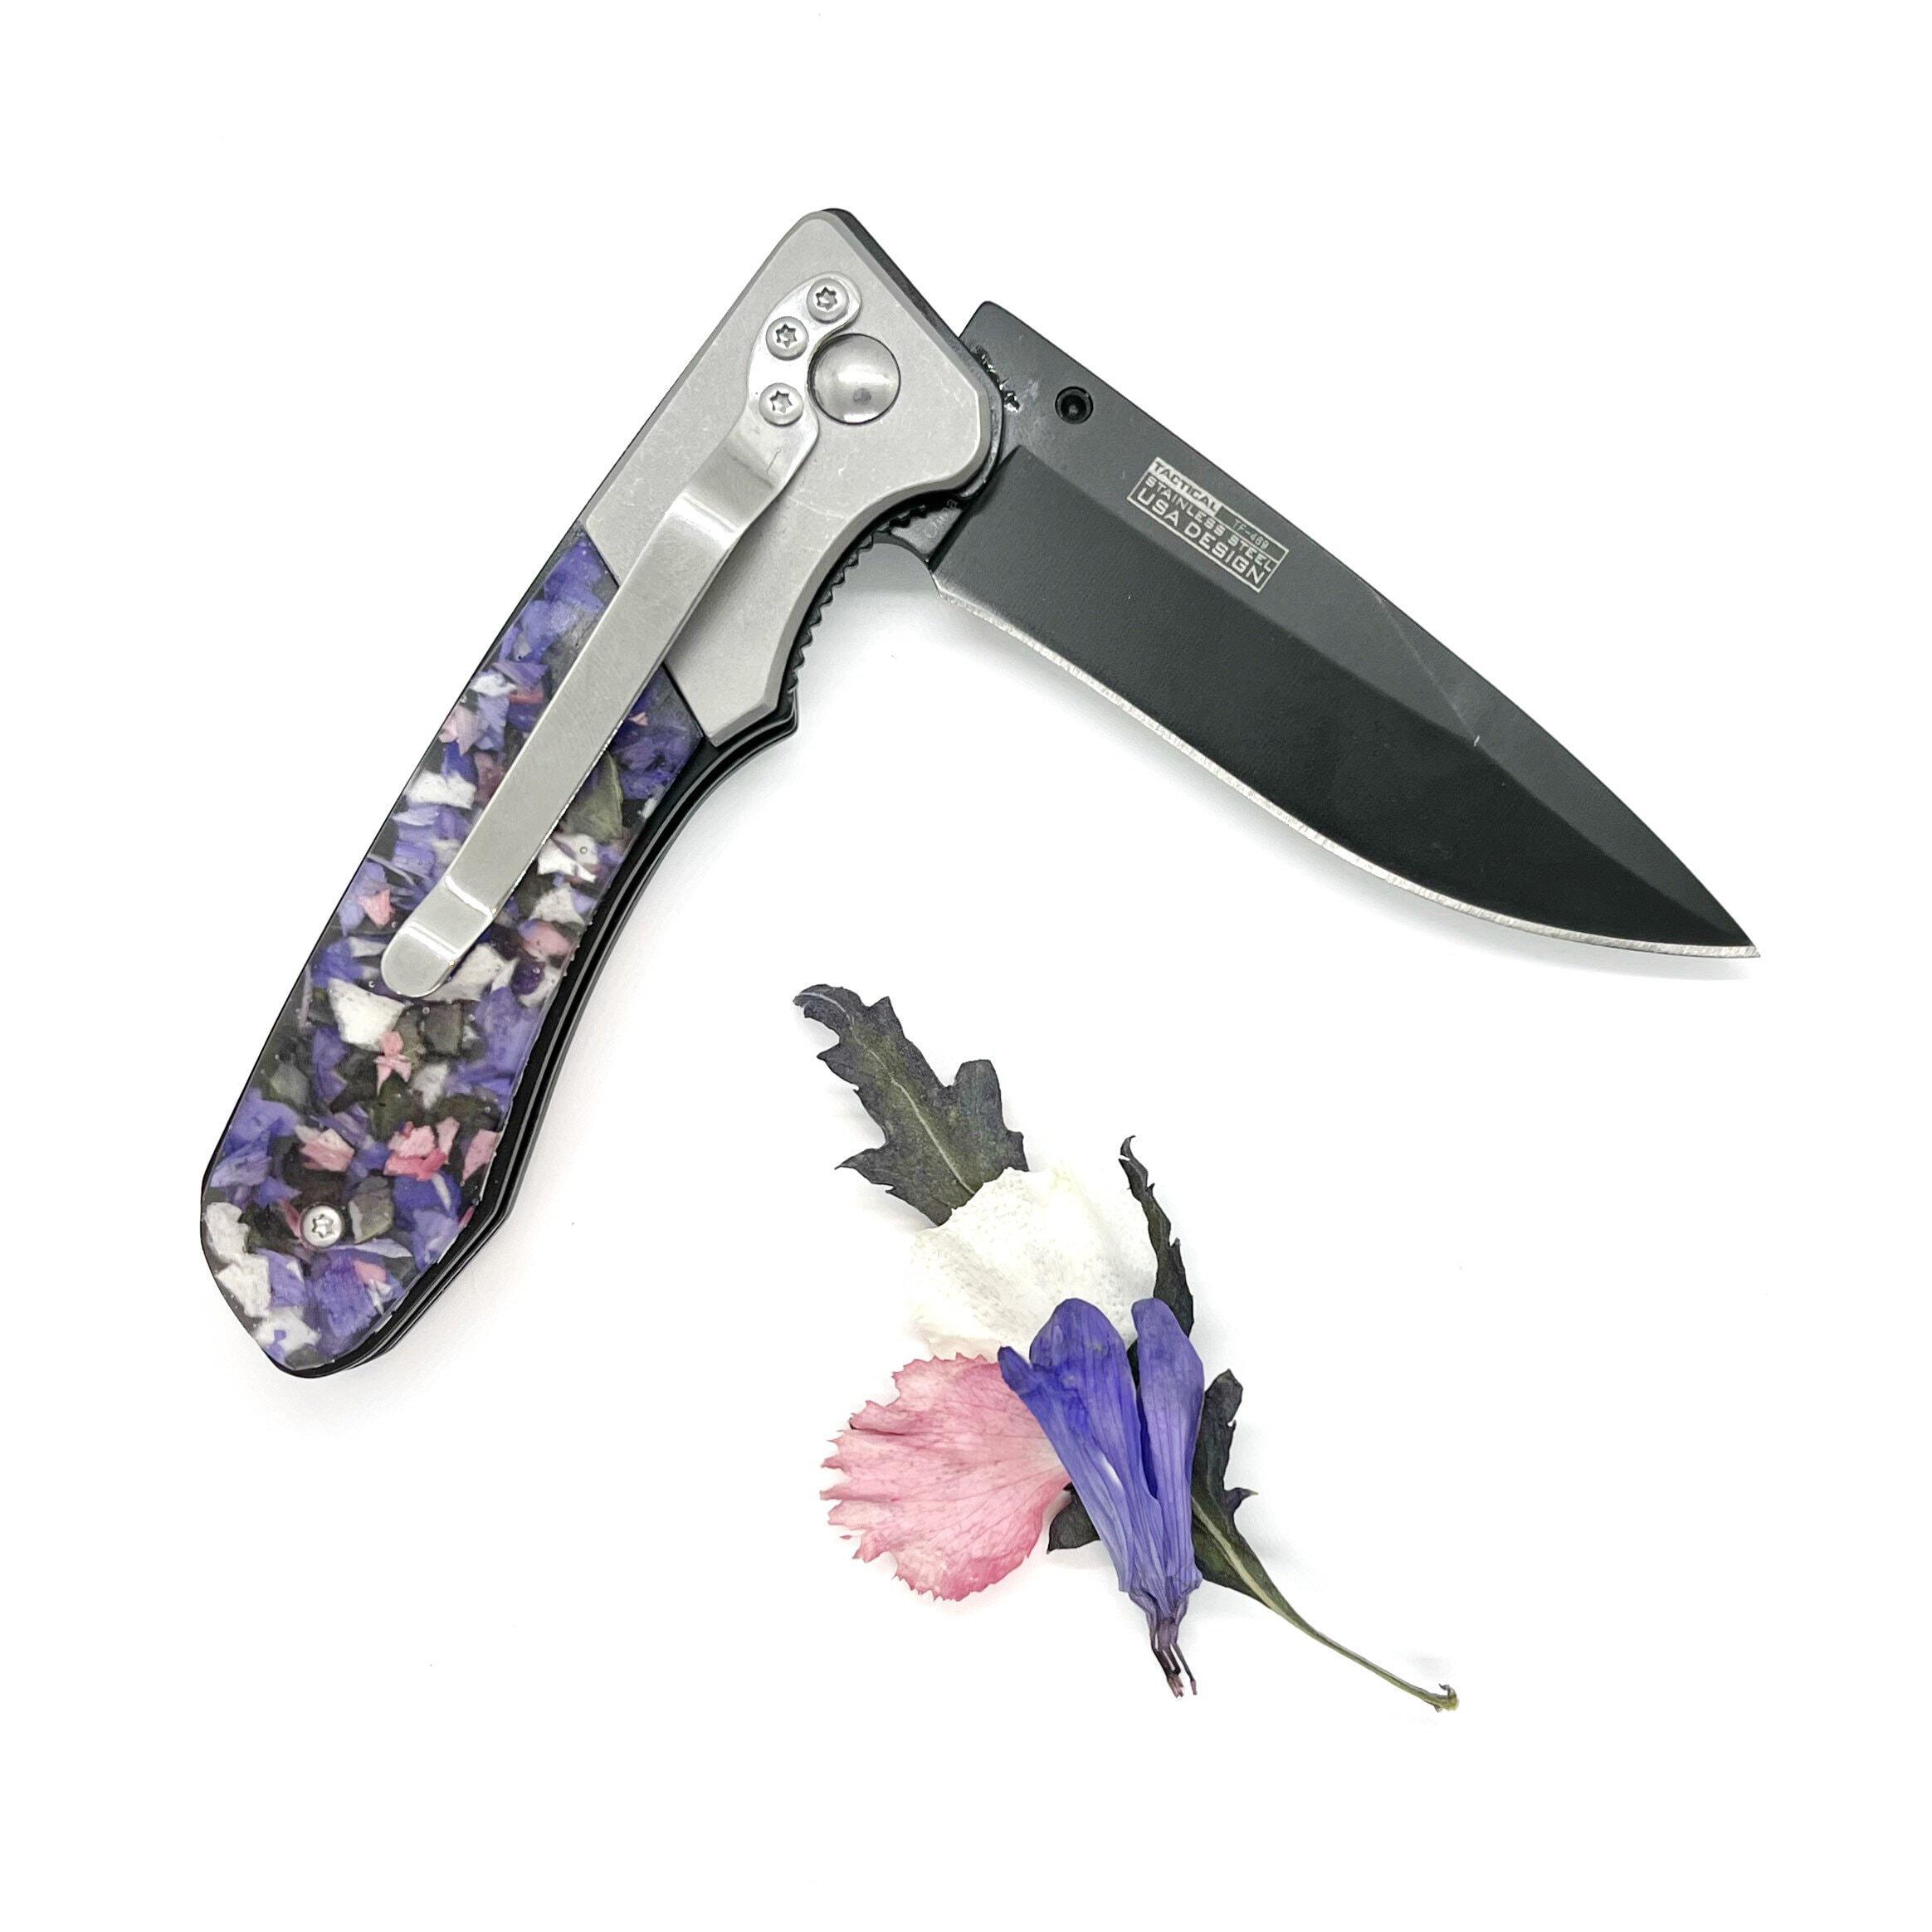 Professional Crafting Knife, Plant Knife, Folding Pocket Knife